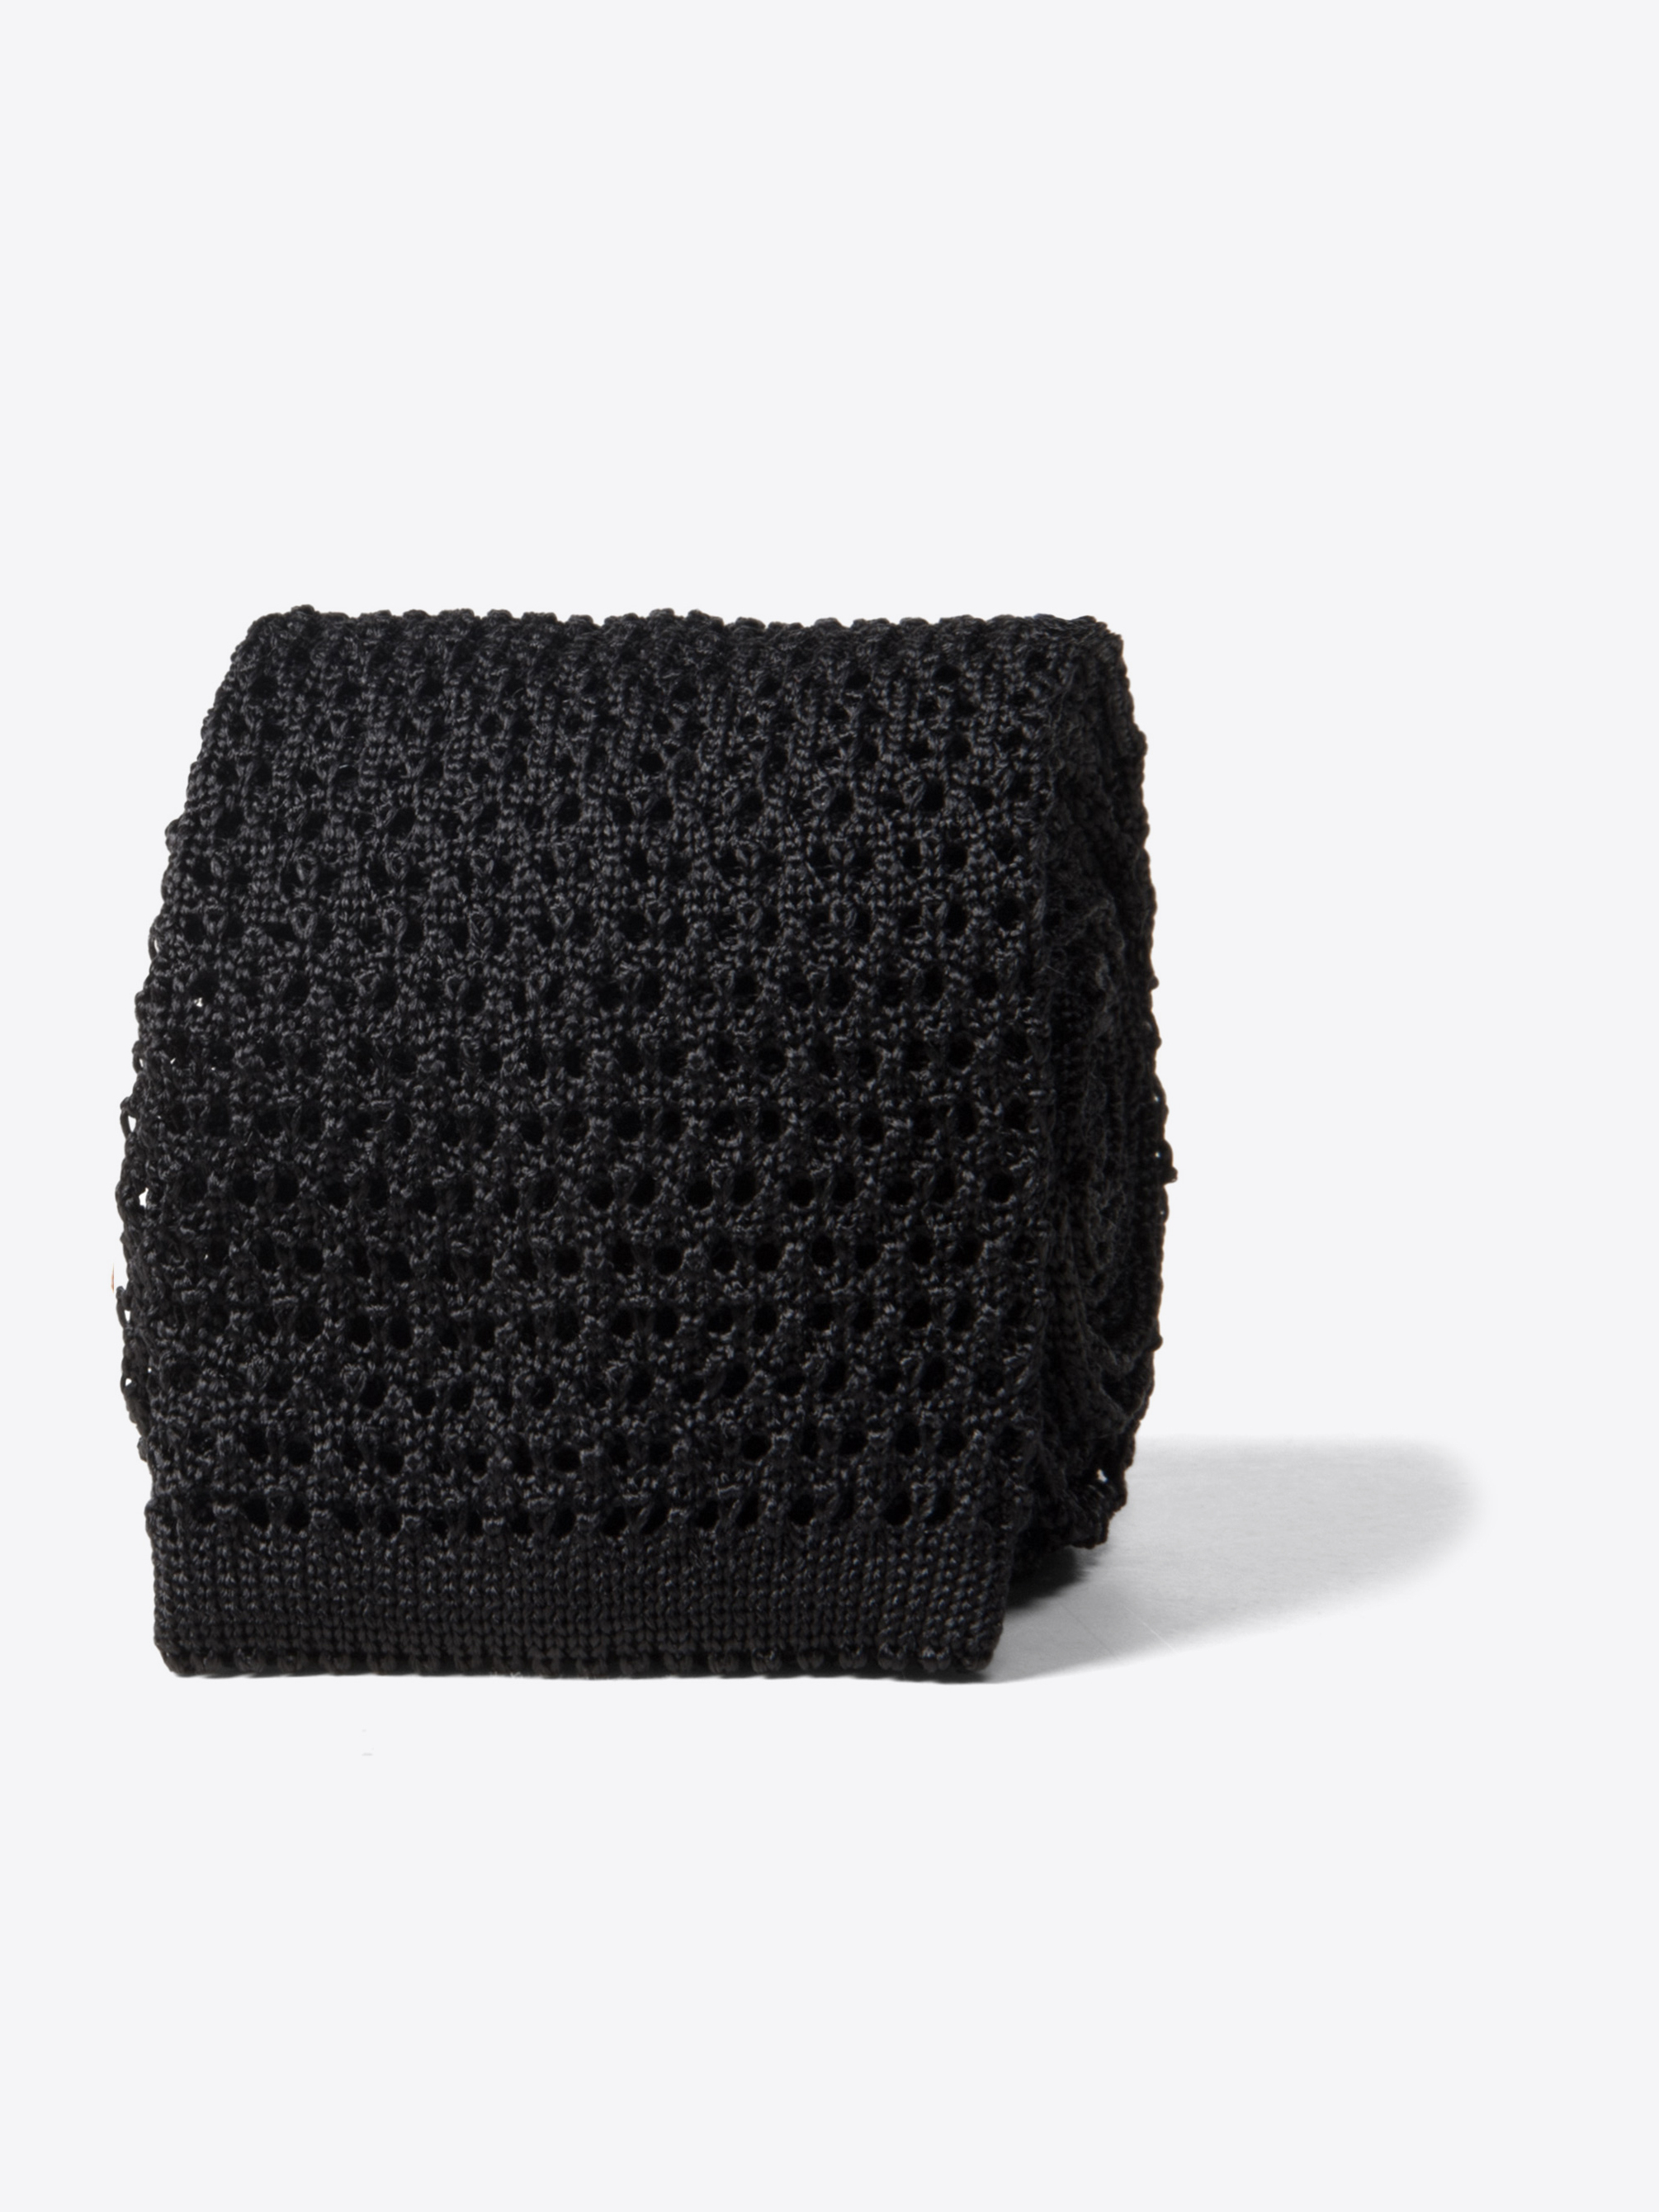 Zoom Image of Black Silk Knit Tie